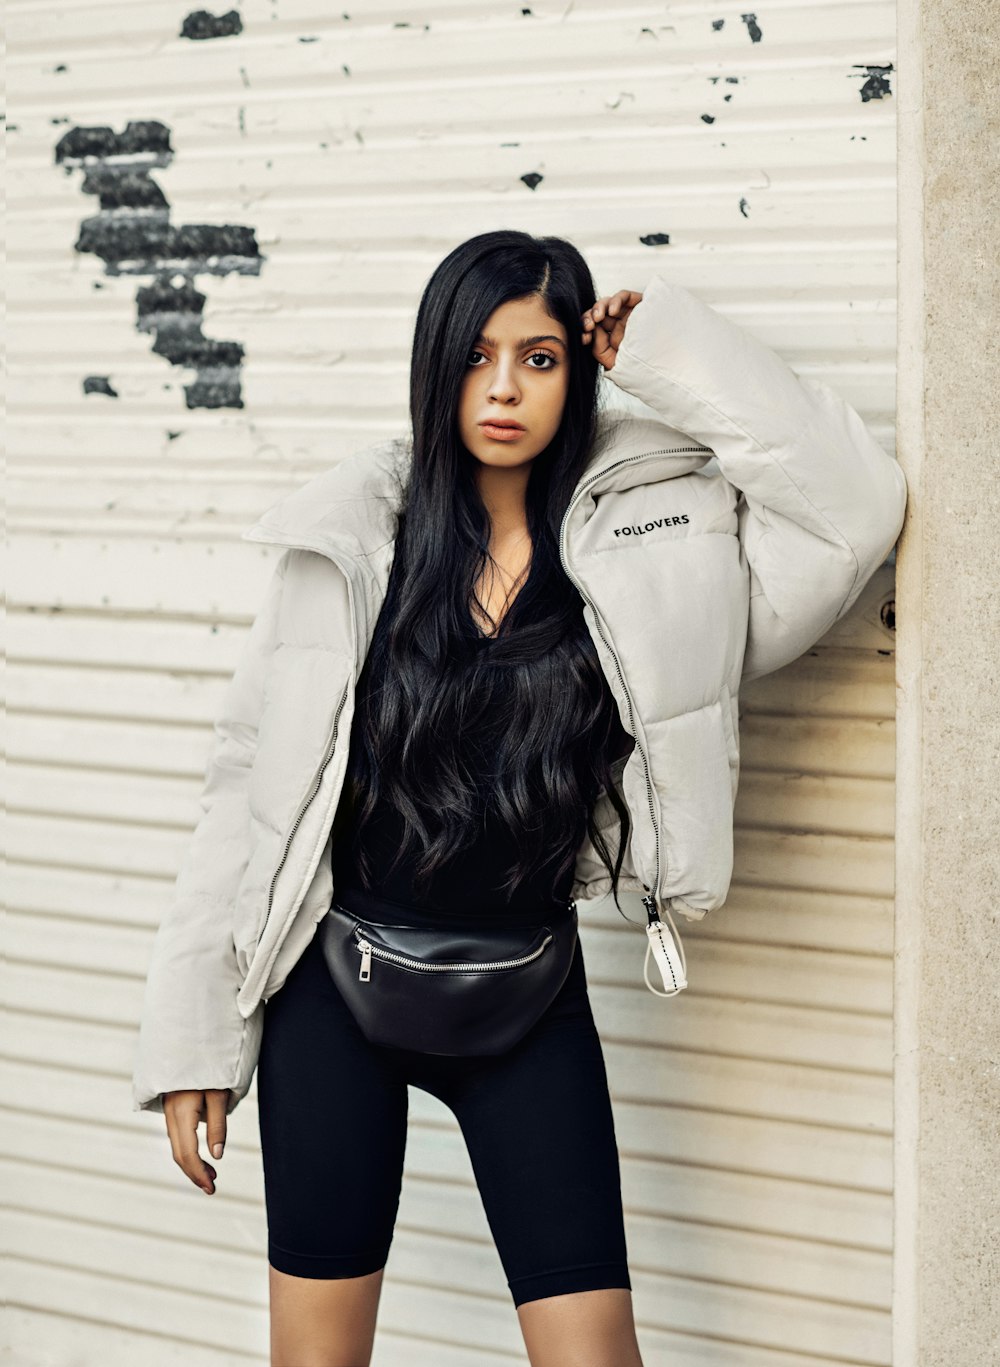 Woman wearing gray puffer jacket, black shorts, and leather fanny pack  photo – Free Fashion Image on Unsplash